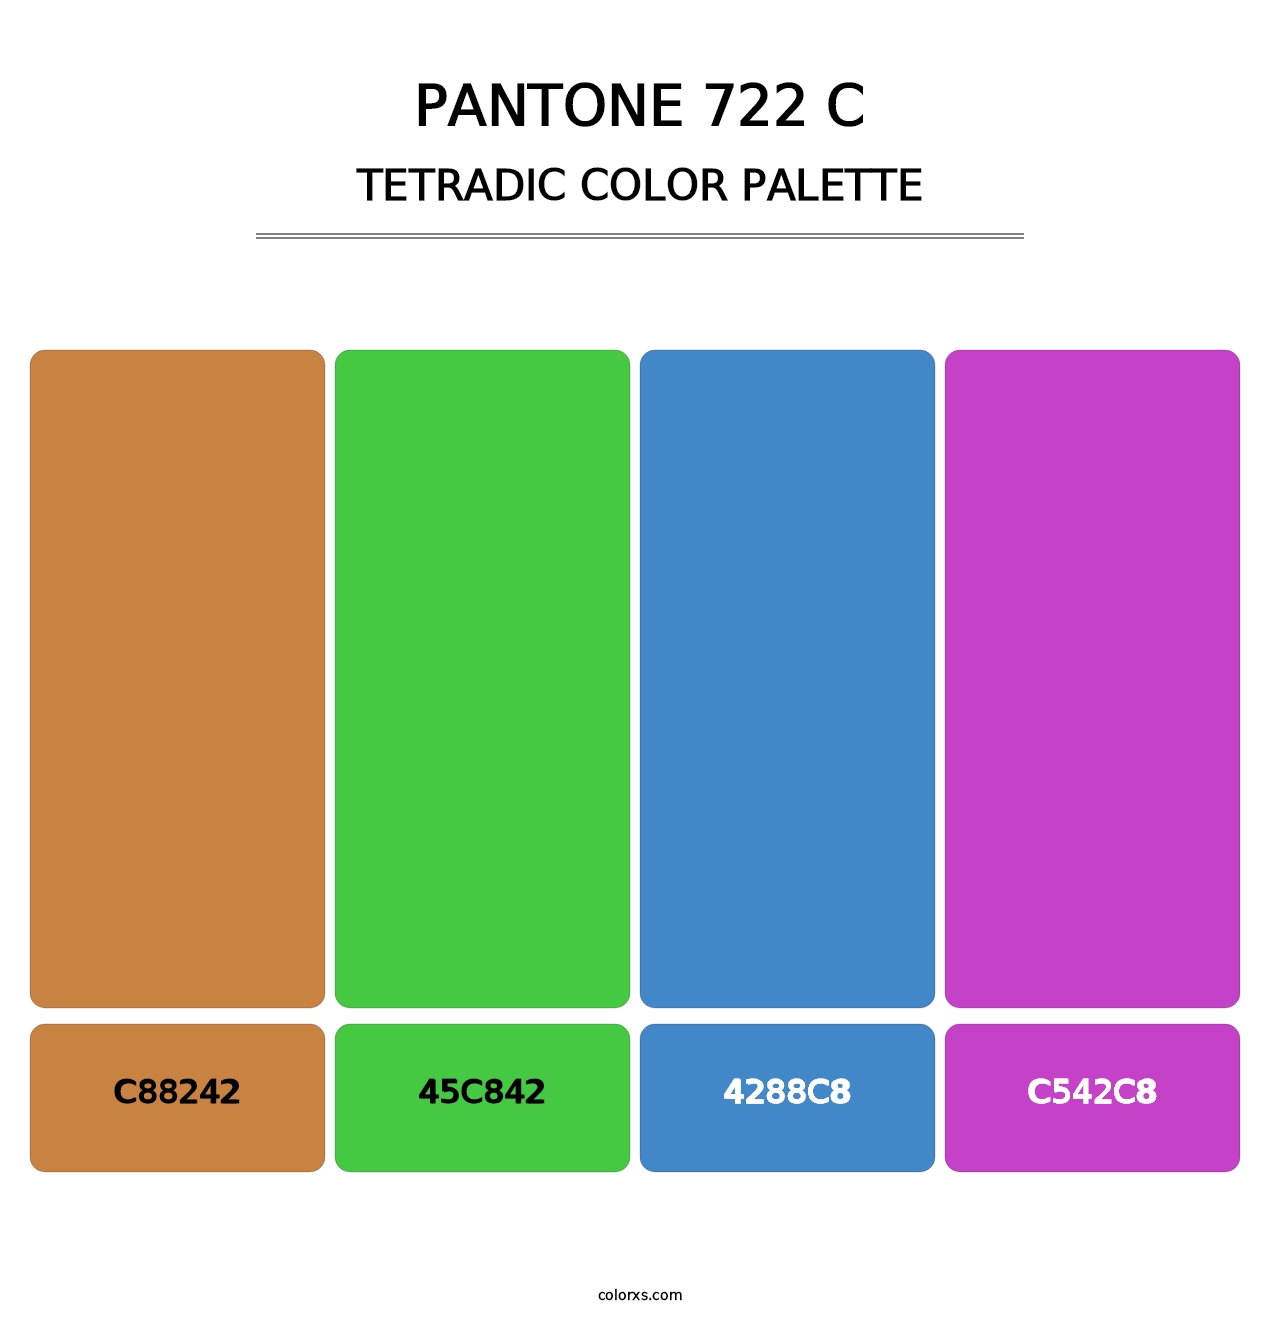 PANTONE 722 C - Tetradic Color Palette